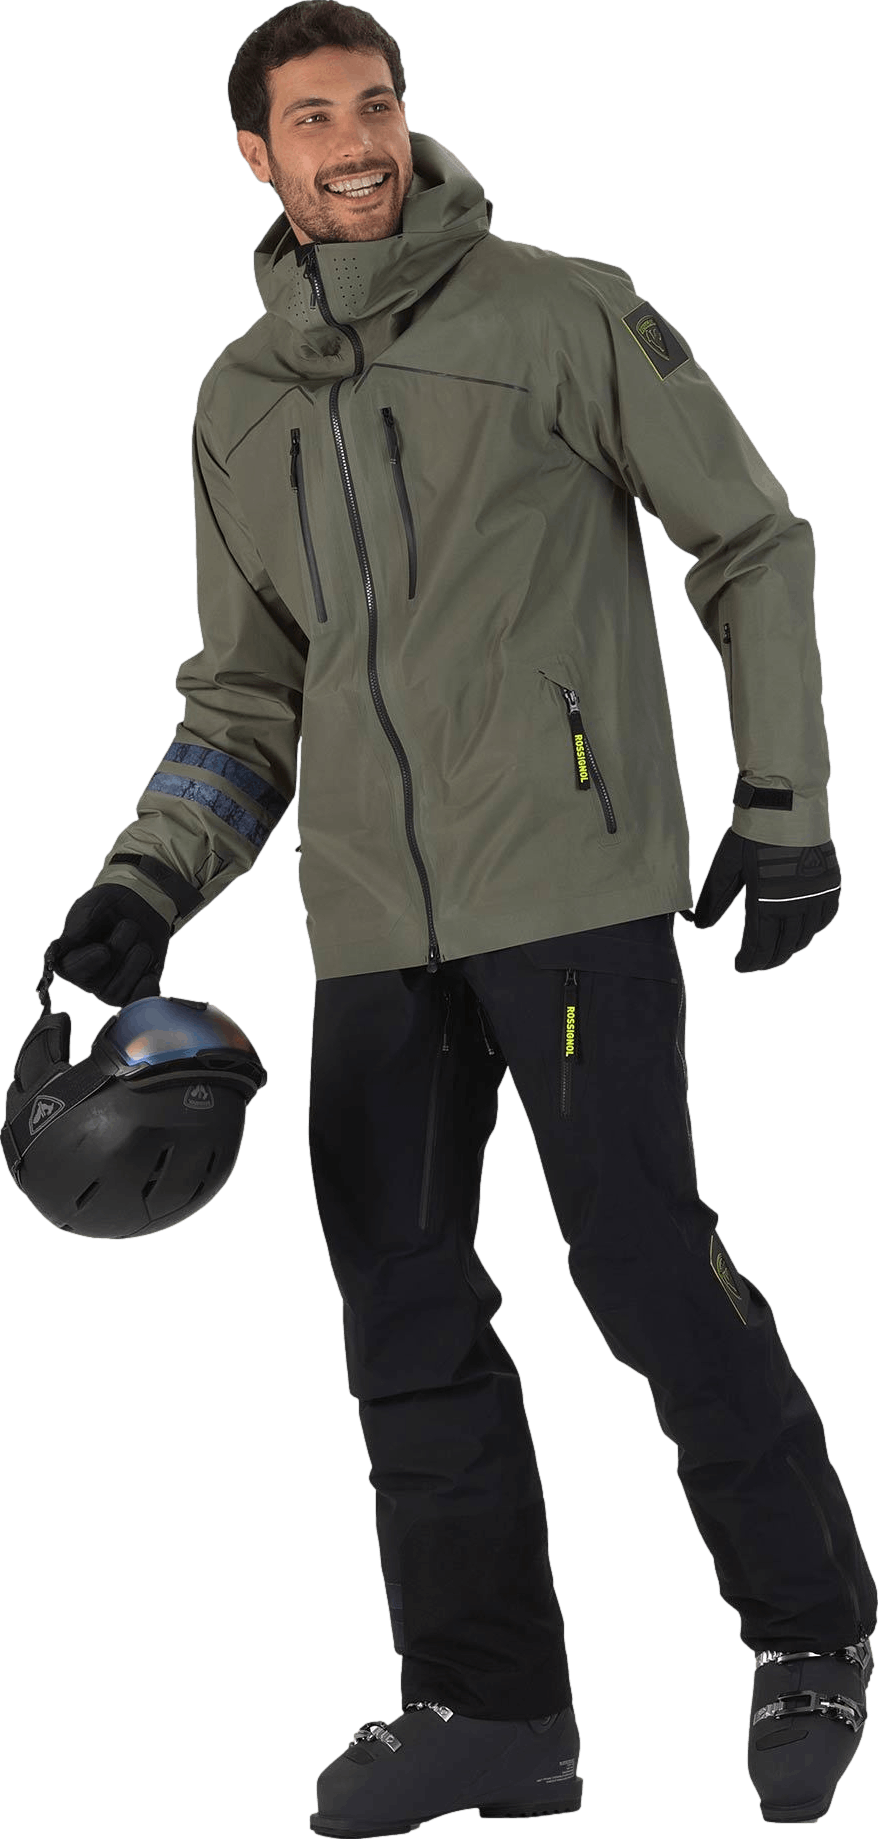 Rossignol Men's Atelier S Ride Free Jacket